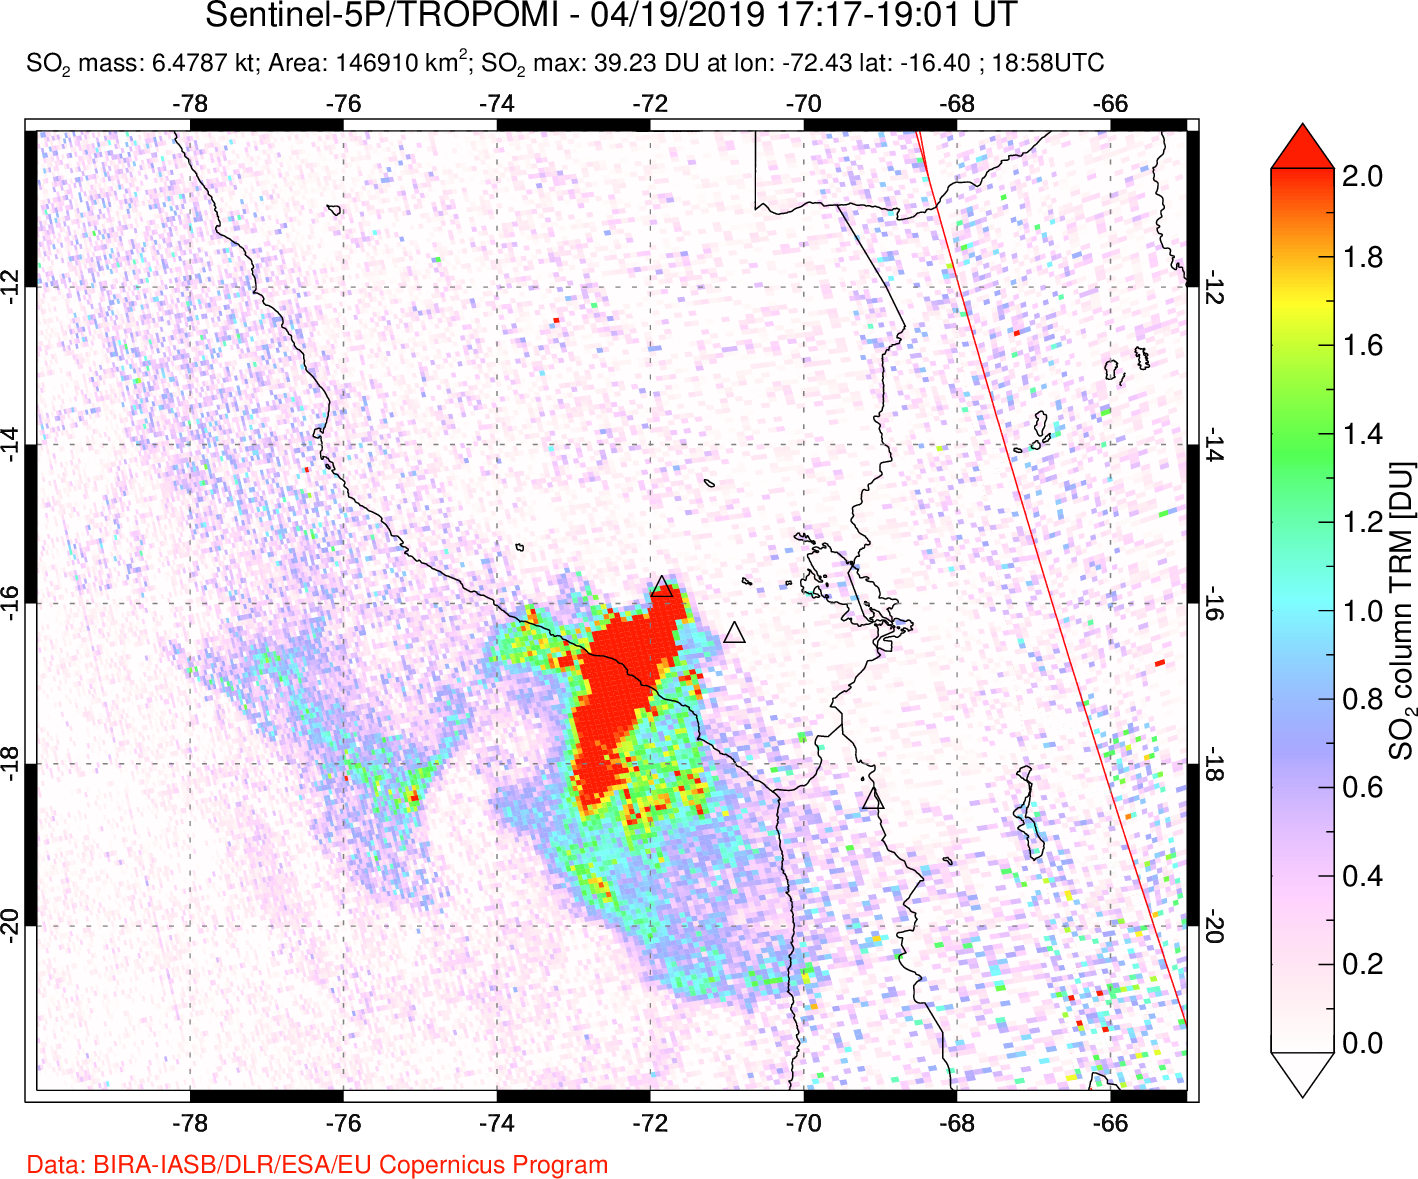 A sulfur dioxide image over Peru on Apr 19, 2019.